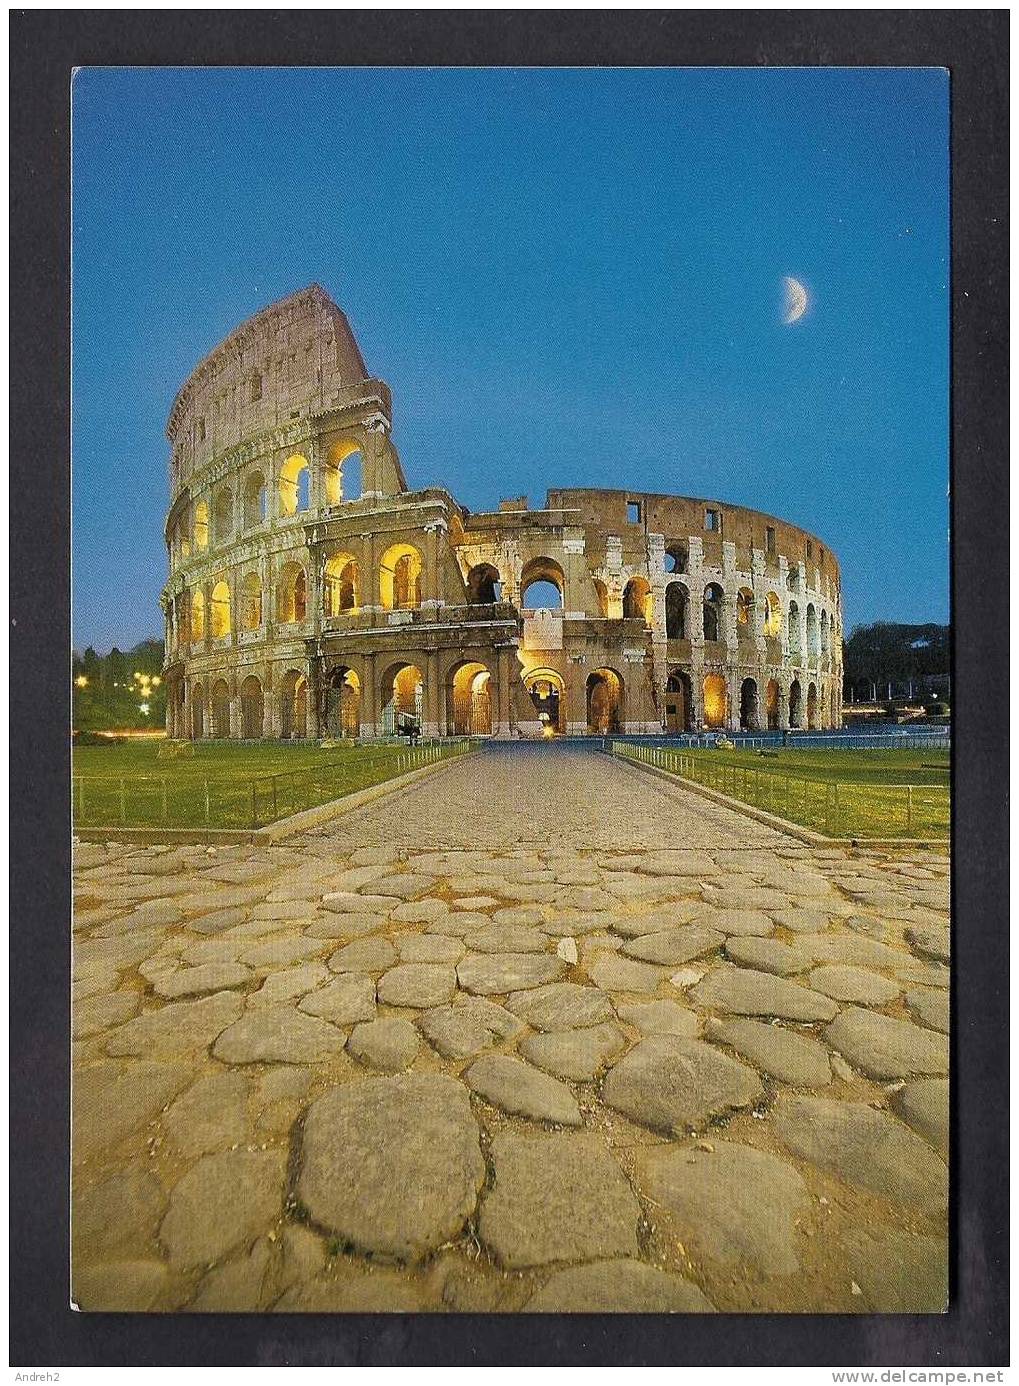 ITALIE - ROMA - ROME - IL COLOSSEO - LE COLISÉE - DAS KOLOSSEUM - Colosseum